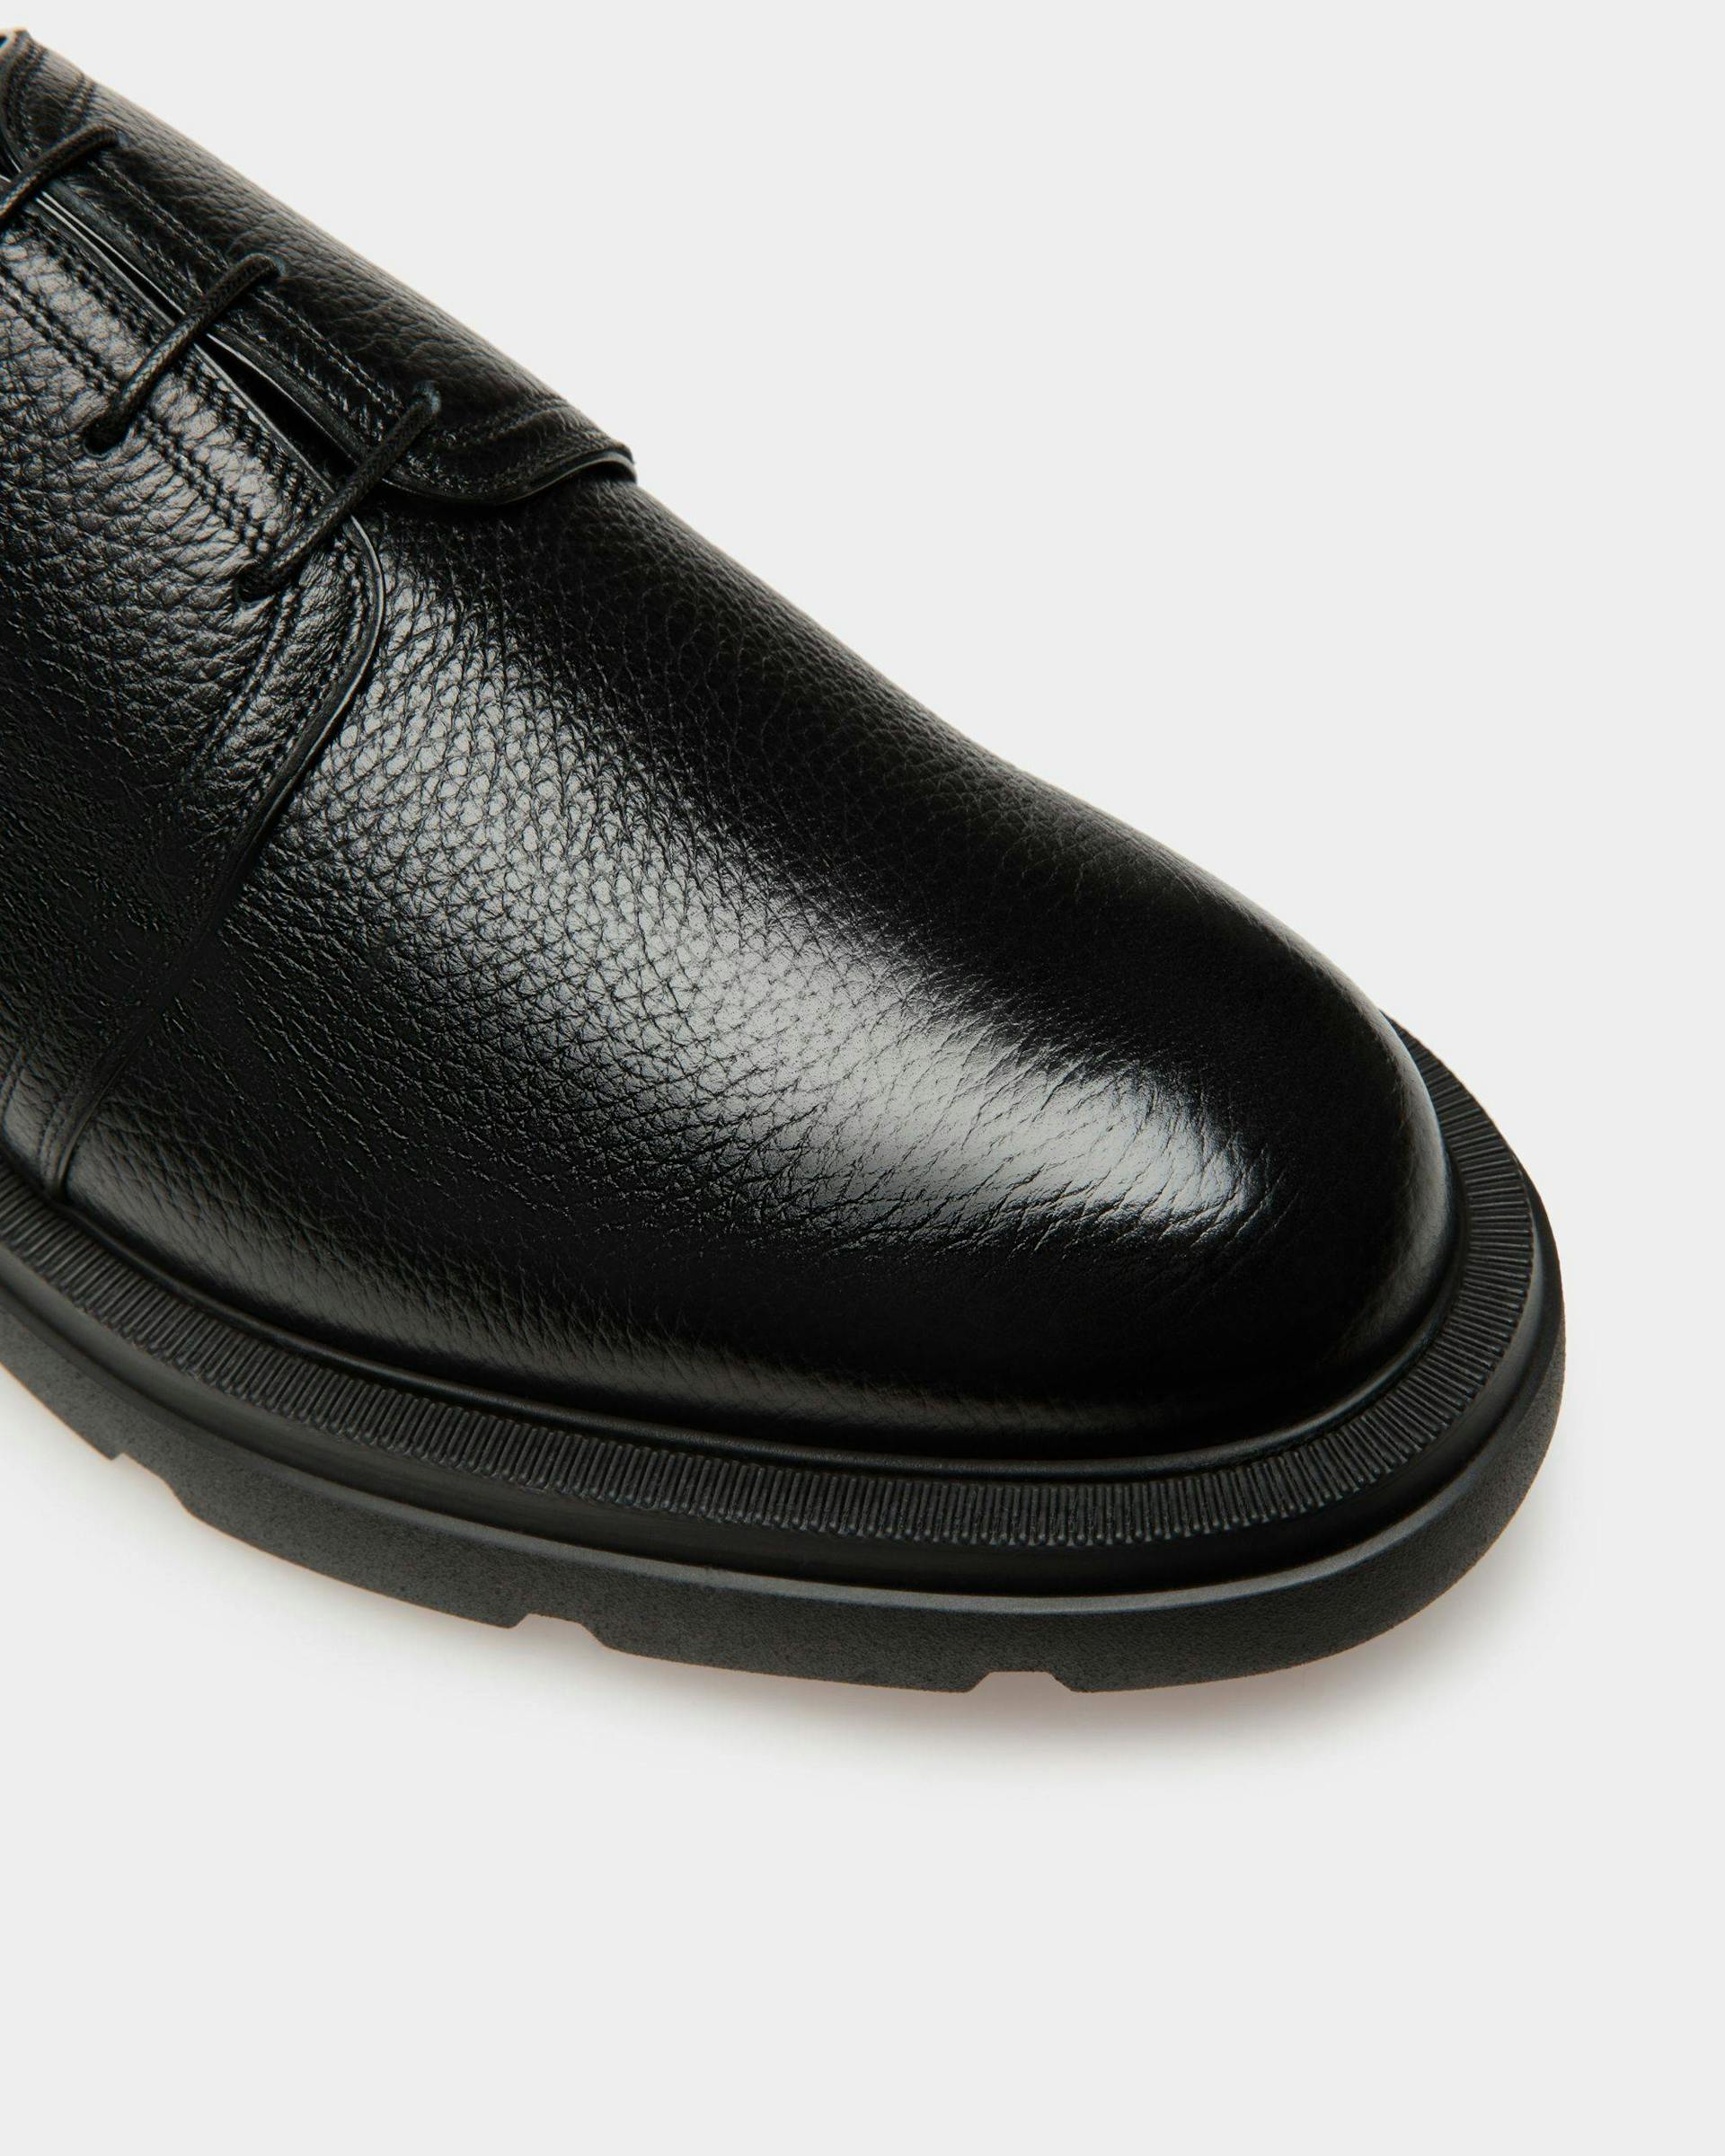 Zurich Derby Shoes In Black Leather - Men's - Bally - 04